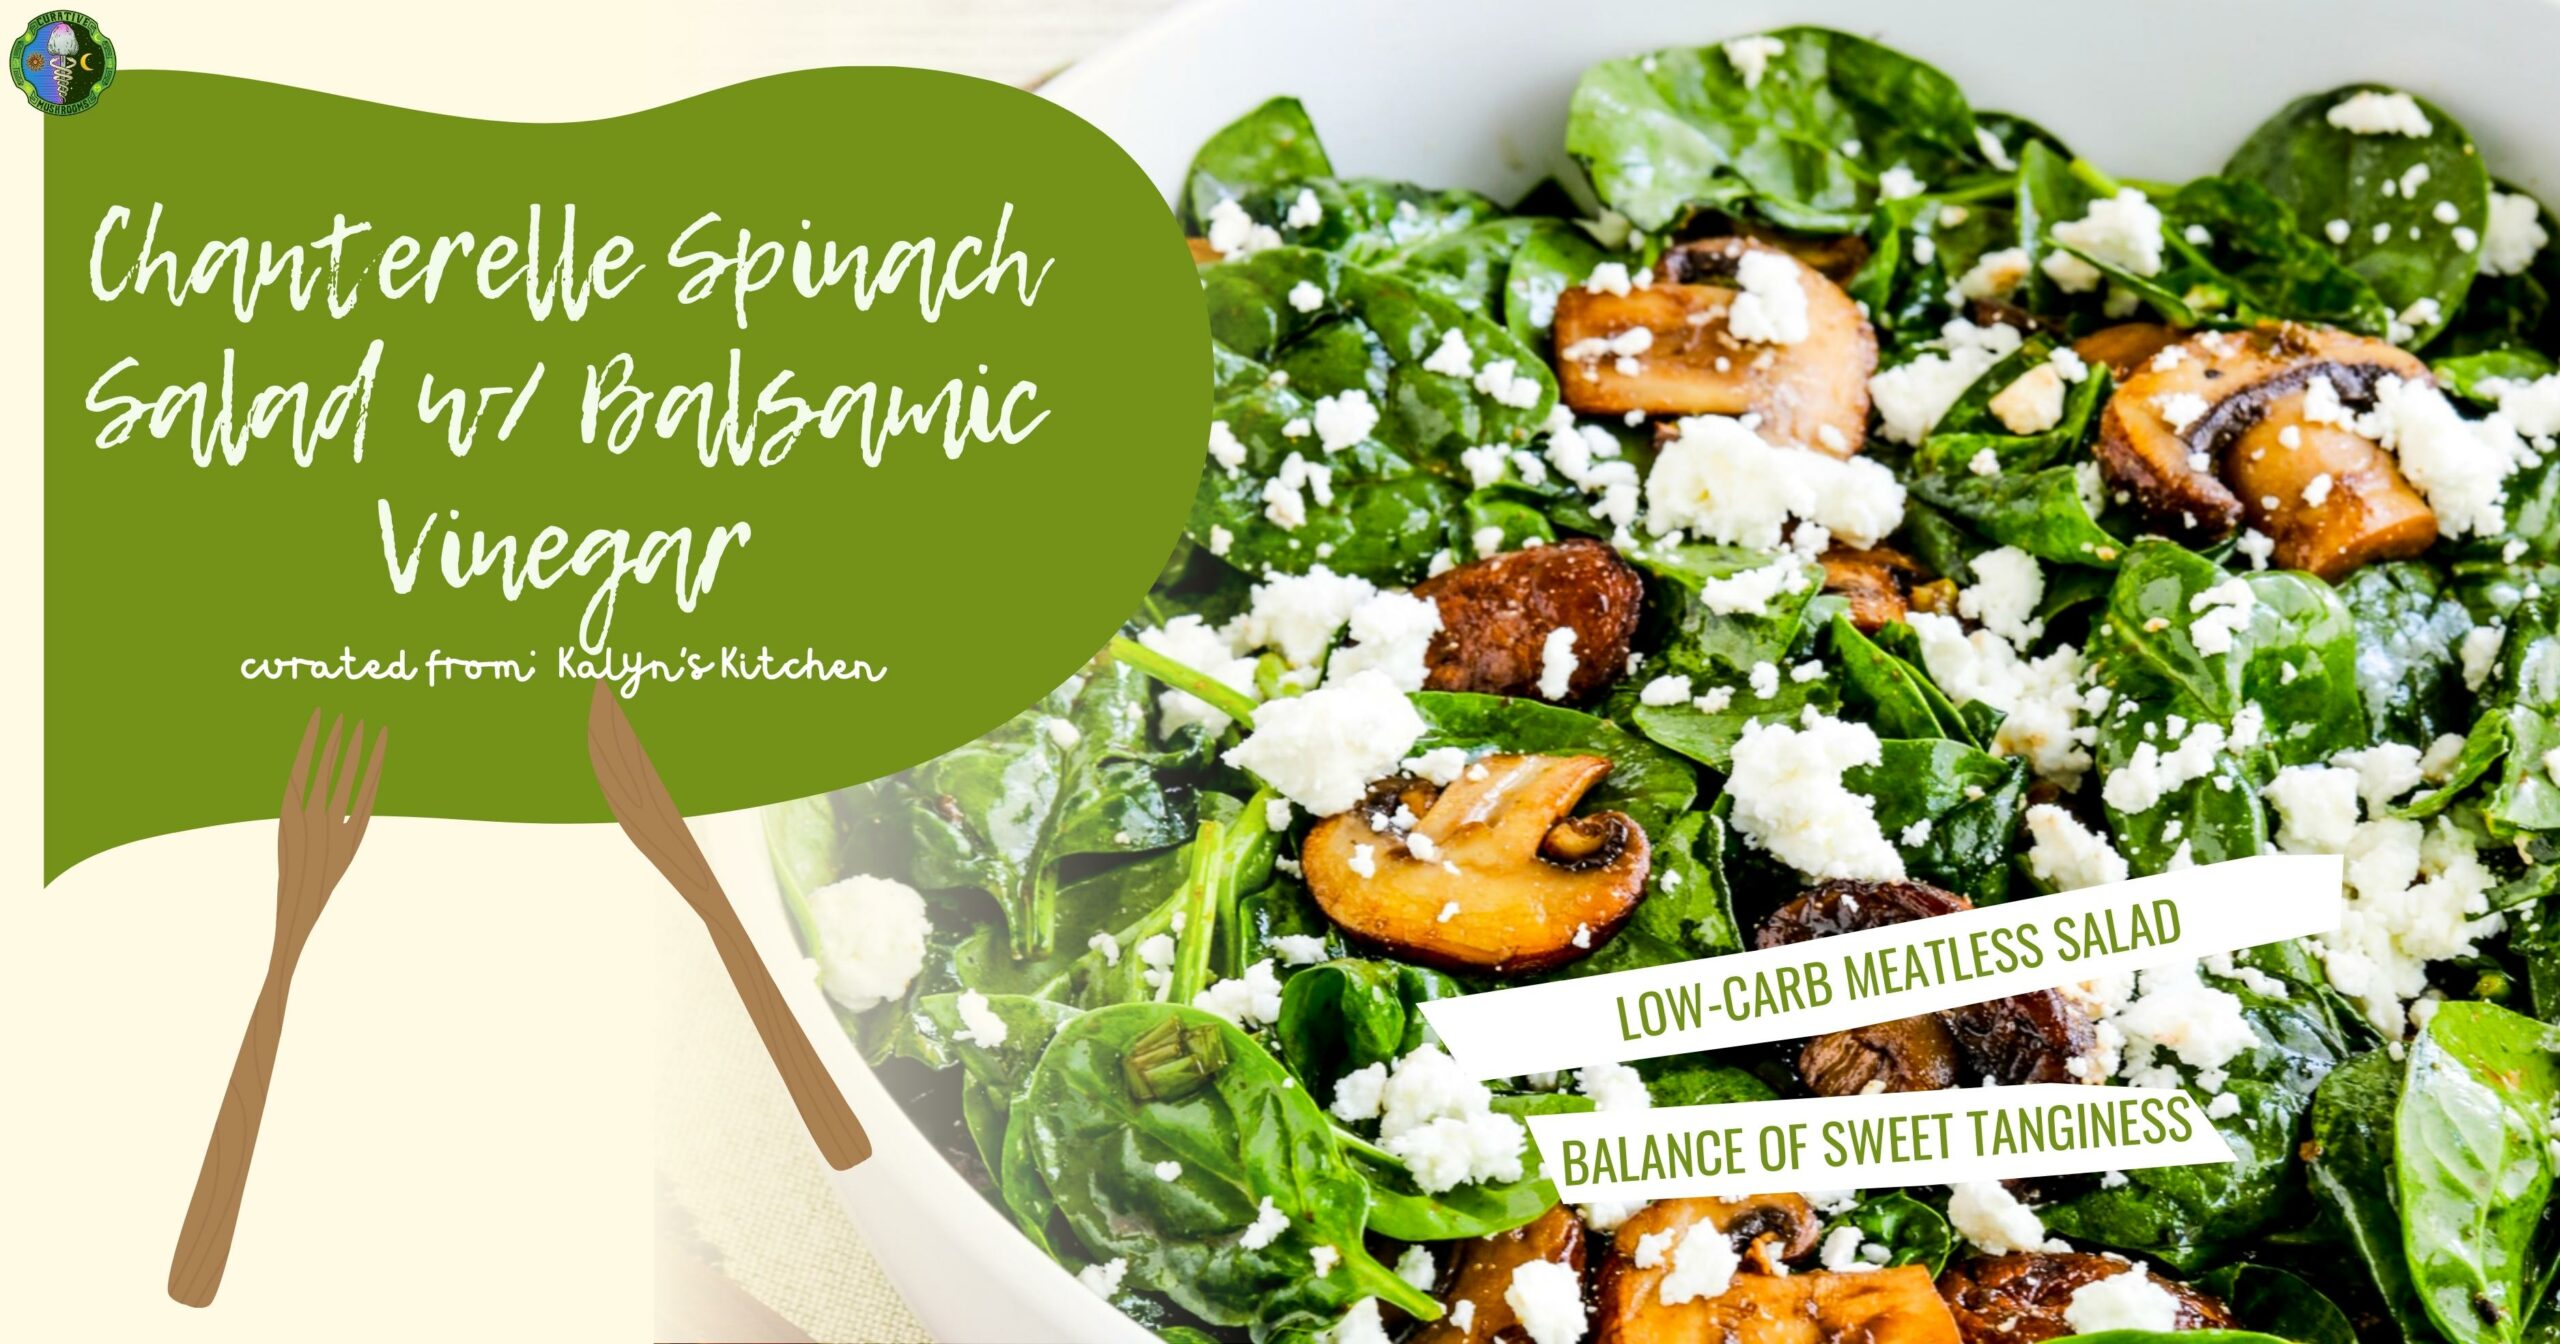 Chanterelle Spinach Salad with Balsamic Vinegar